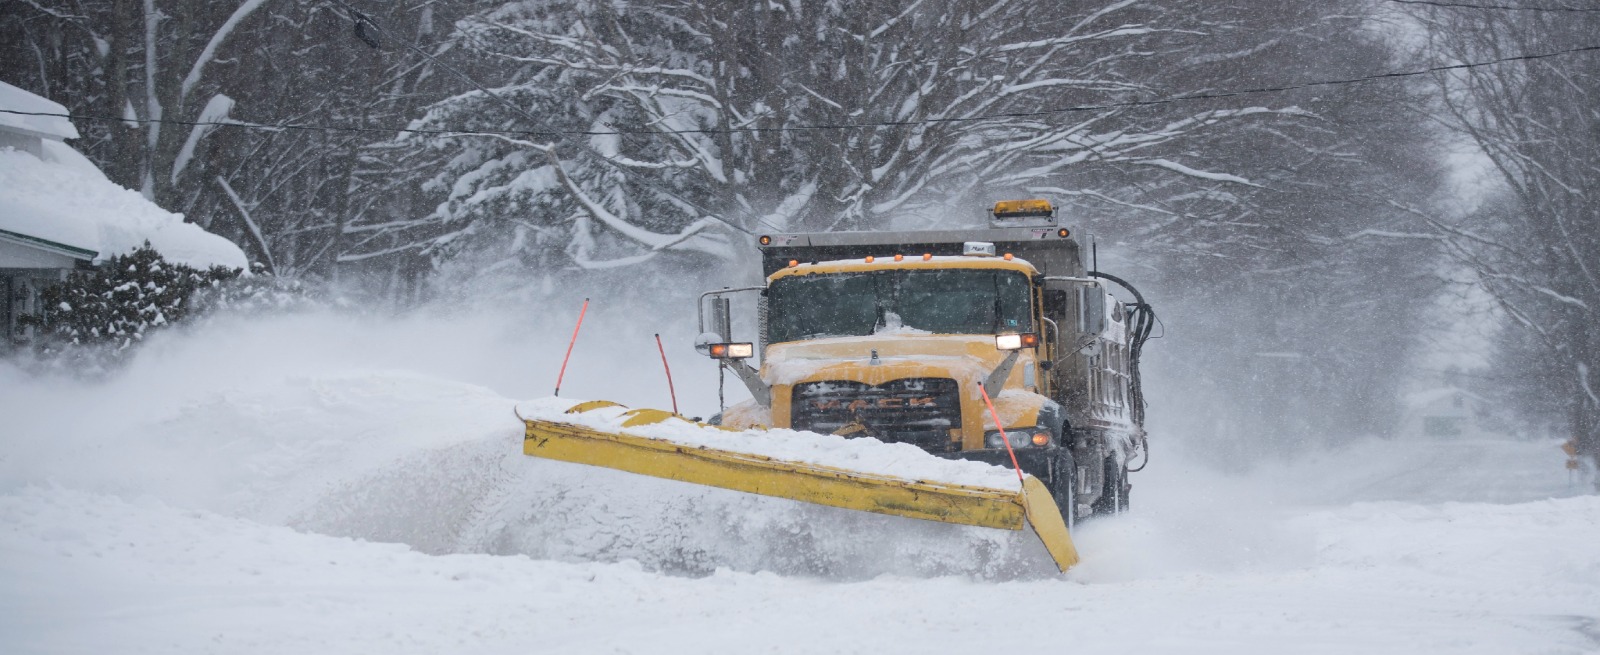 Snow plough in major snow storm